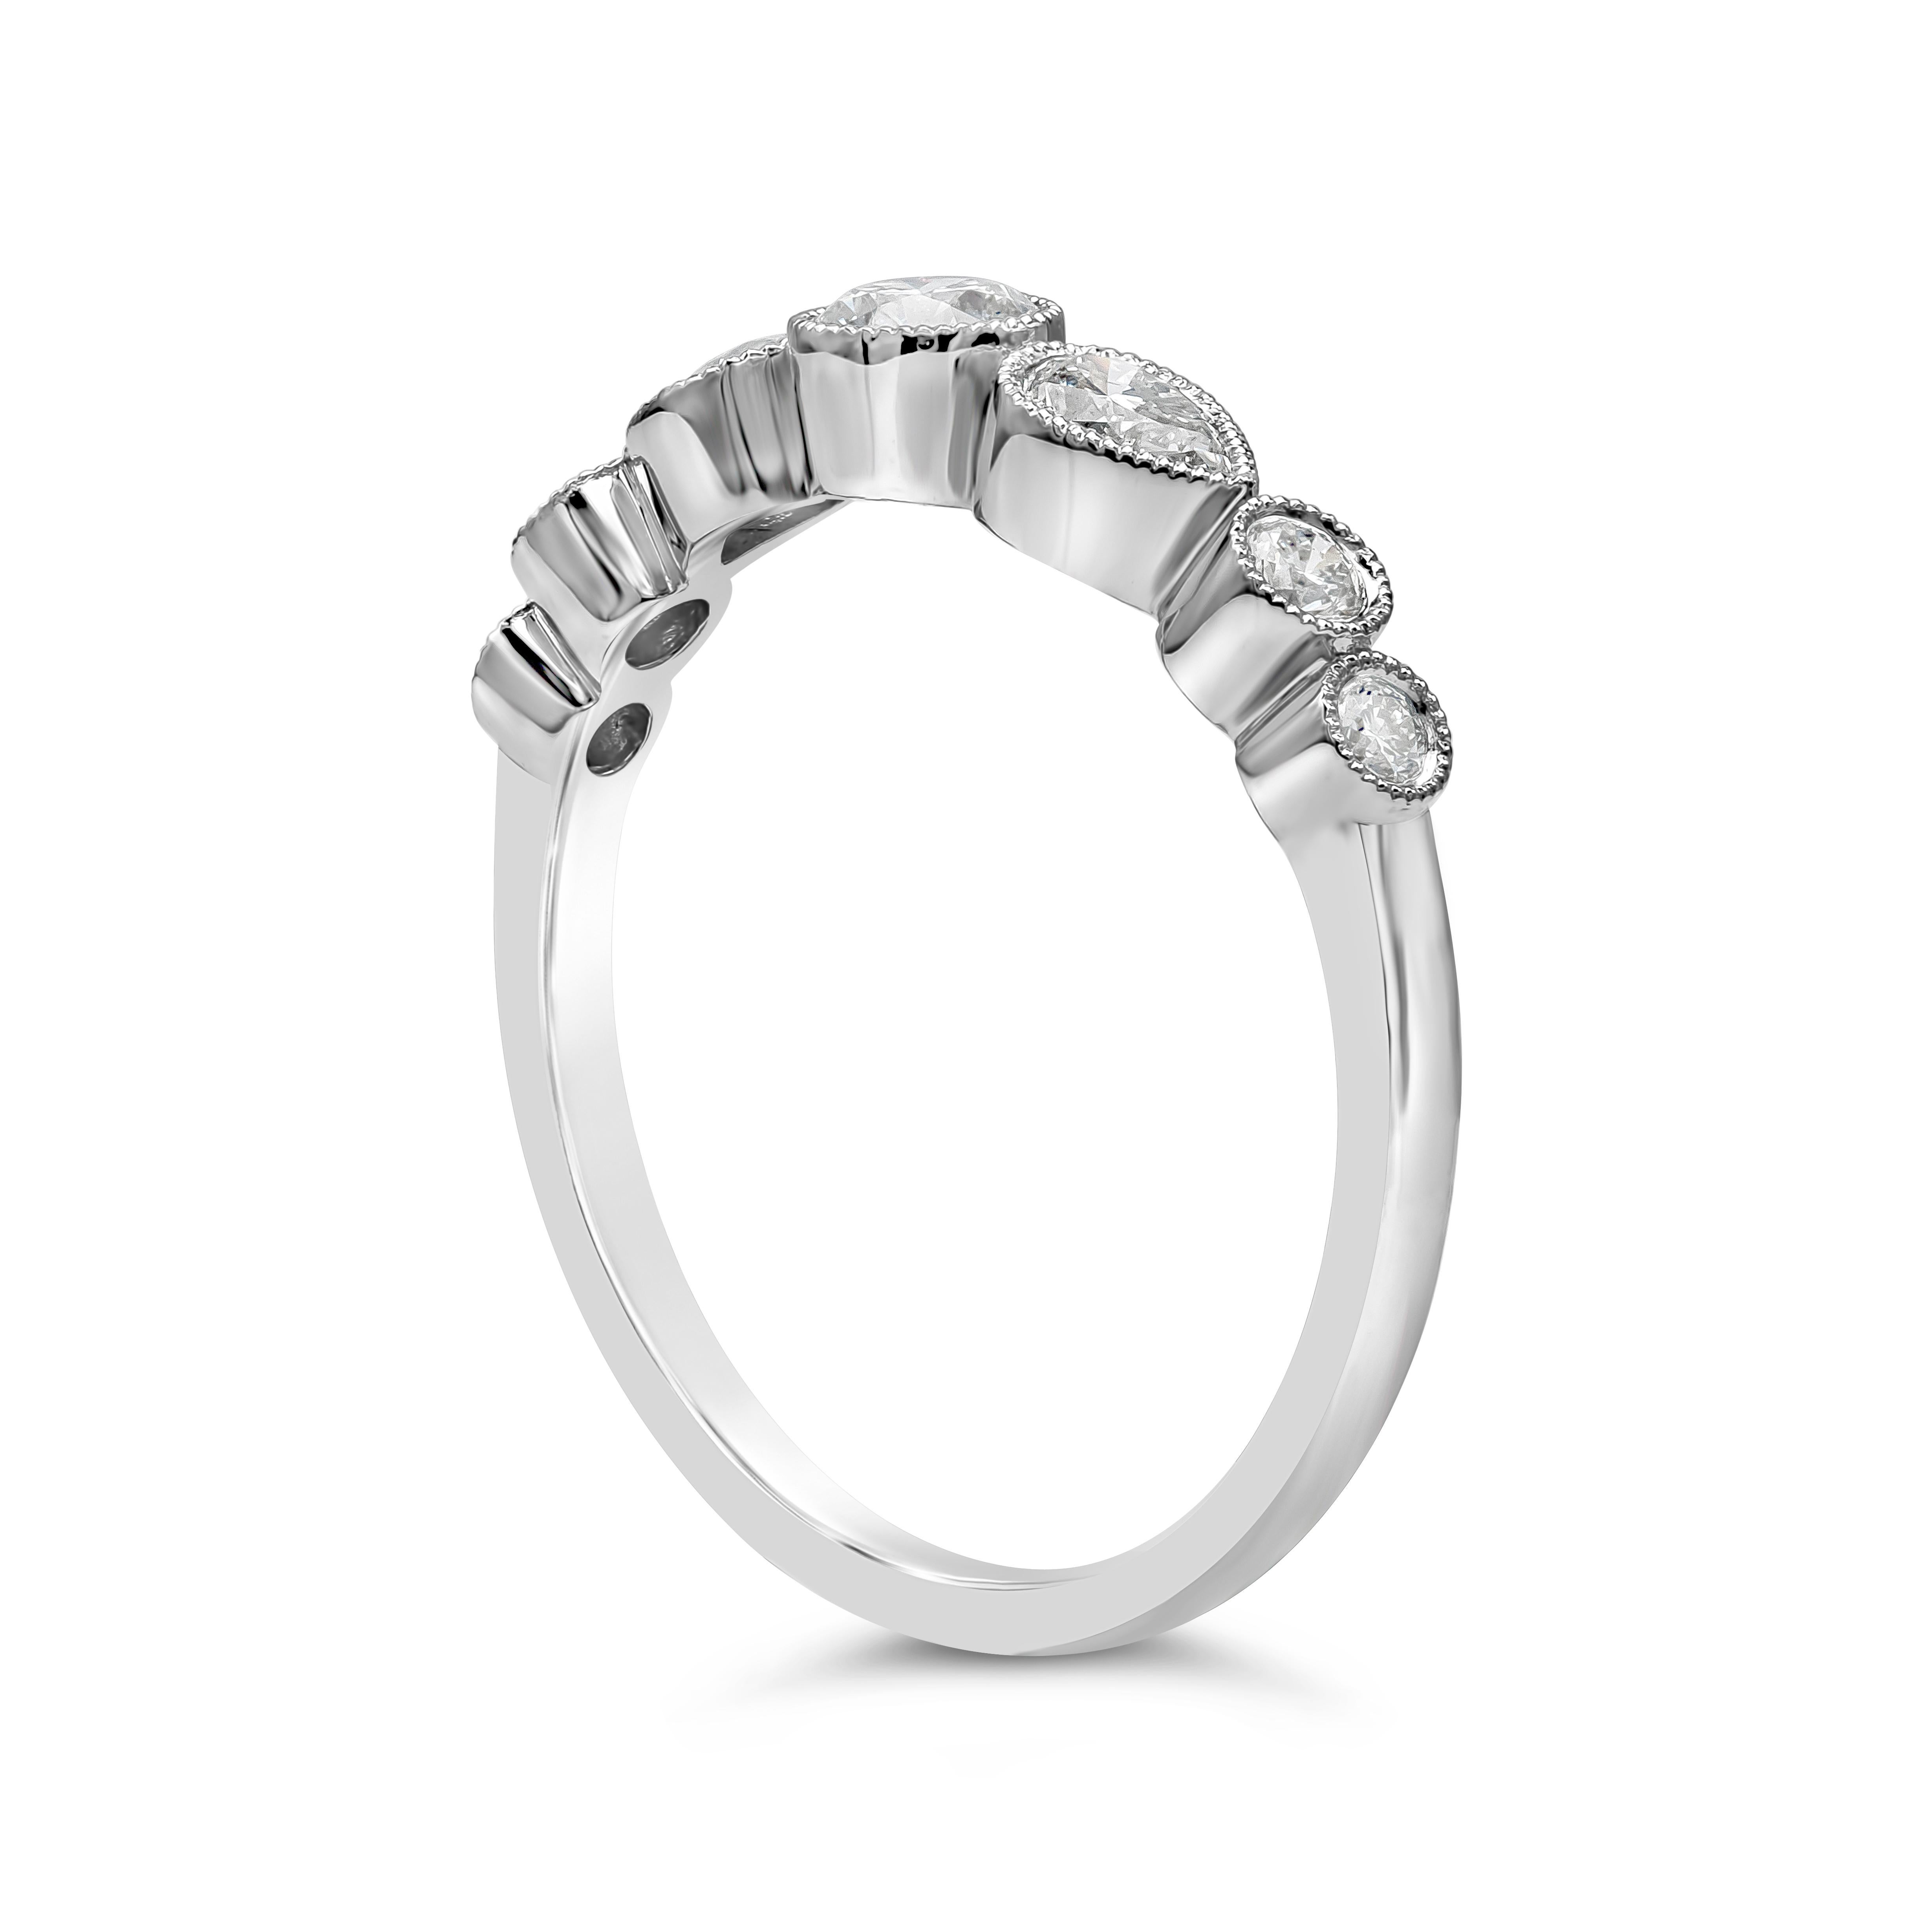 Mixed Cut Roman Malakov, Antique Style 0.62 Carat Diamond Fashion Ring For Sale